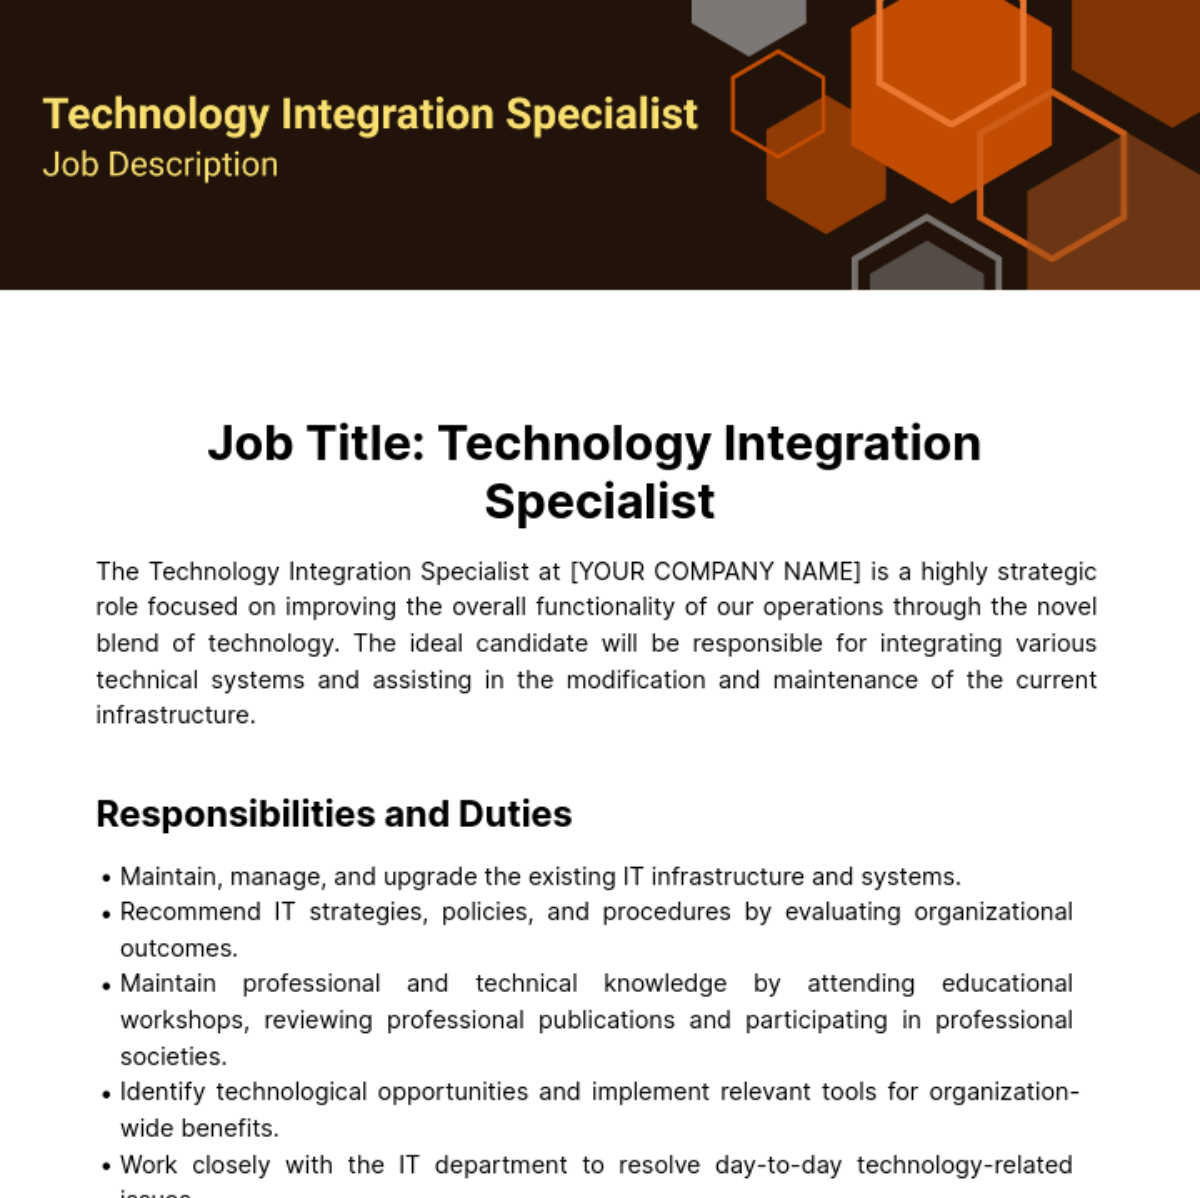 Technology Integration Specialist Job Description Template